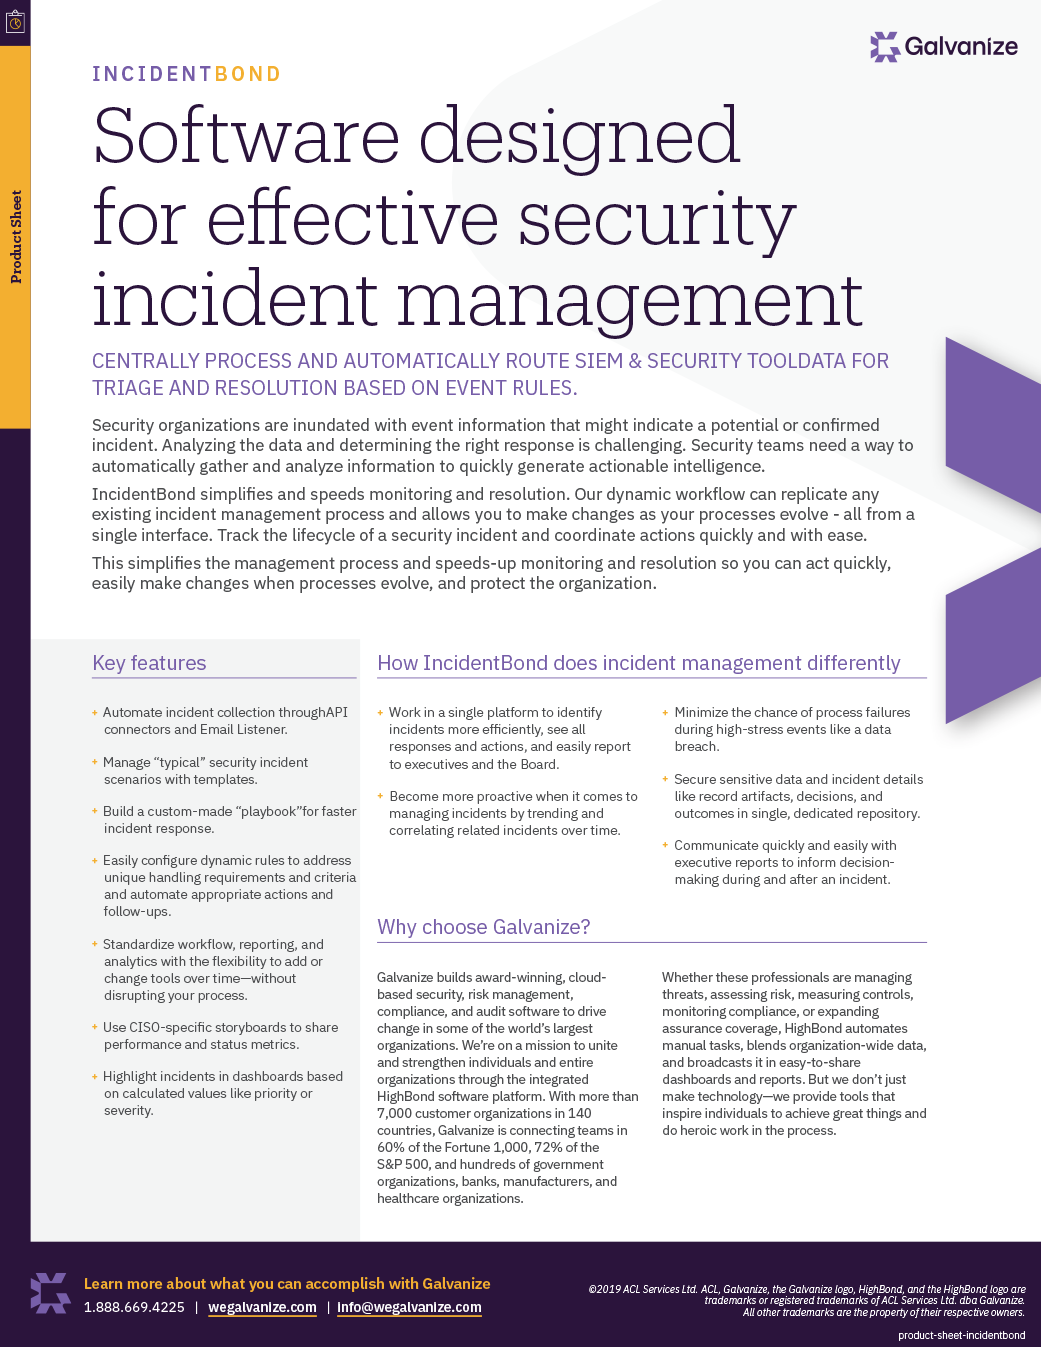 Software designed for effective security incident management